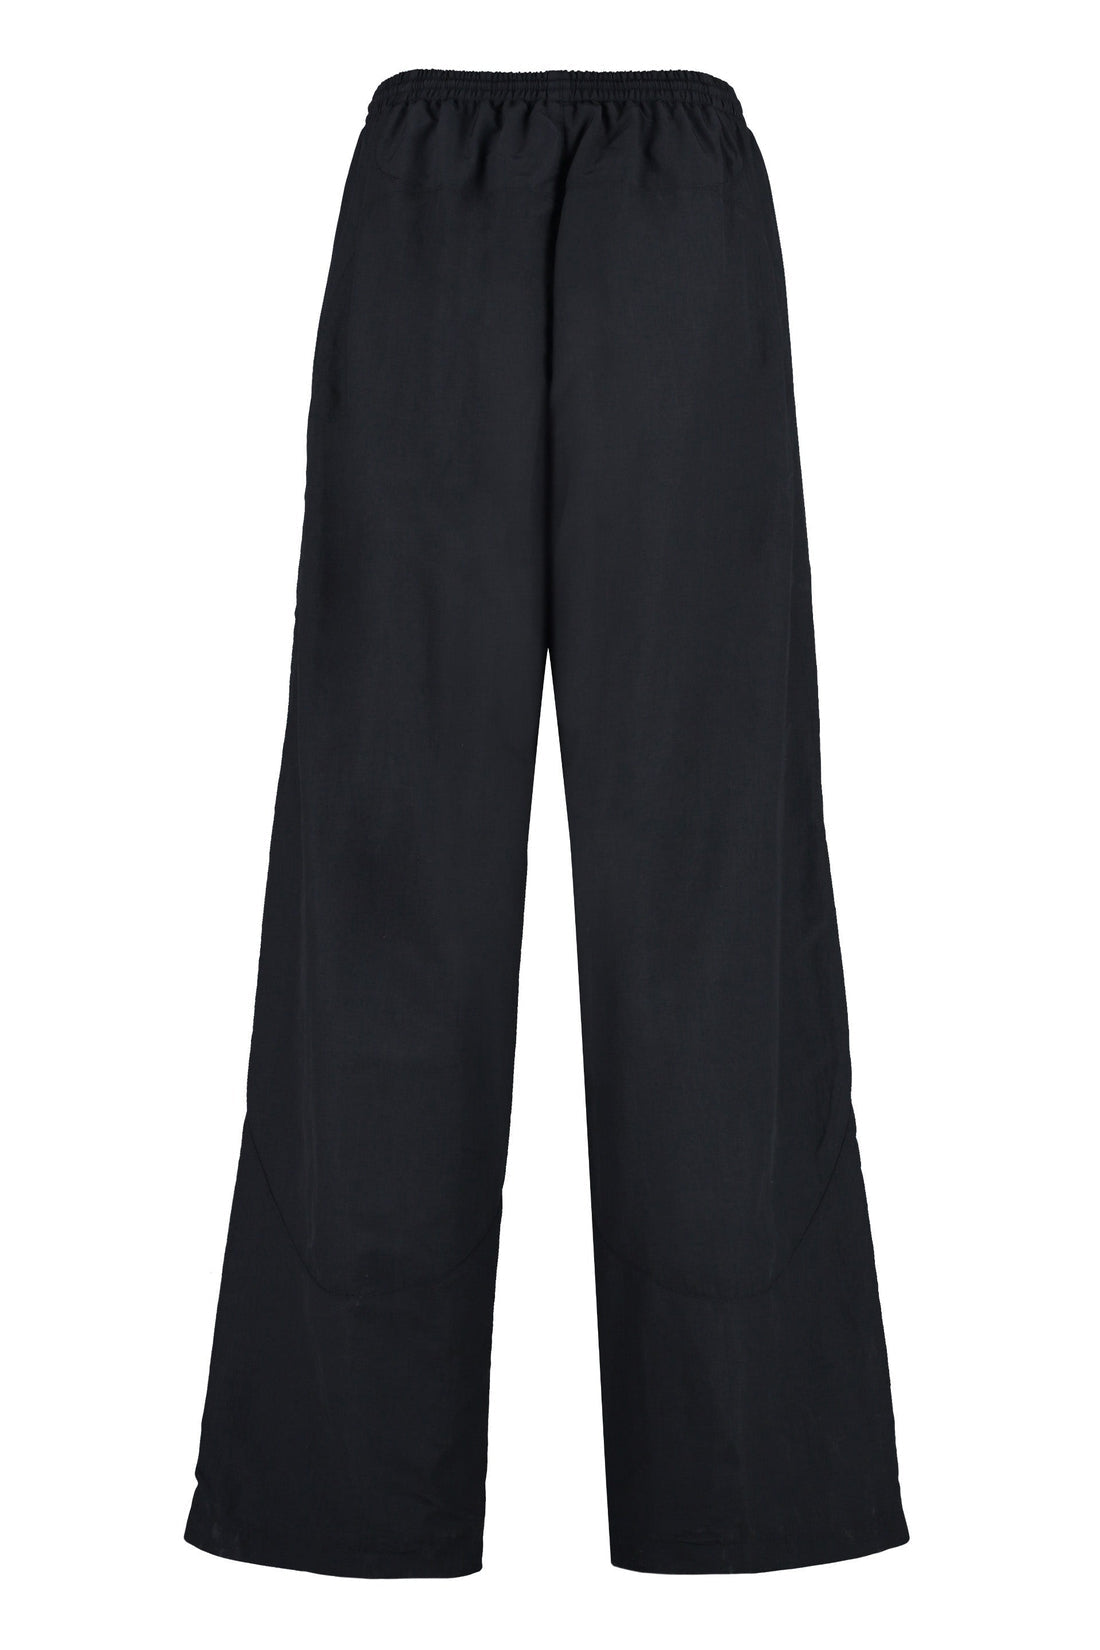 Balenciaga-OUTLET-SALE-Logo detail nylon track-pants-ARCHIVIST